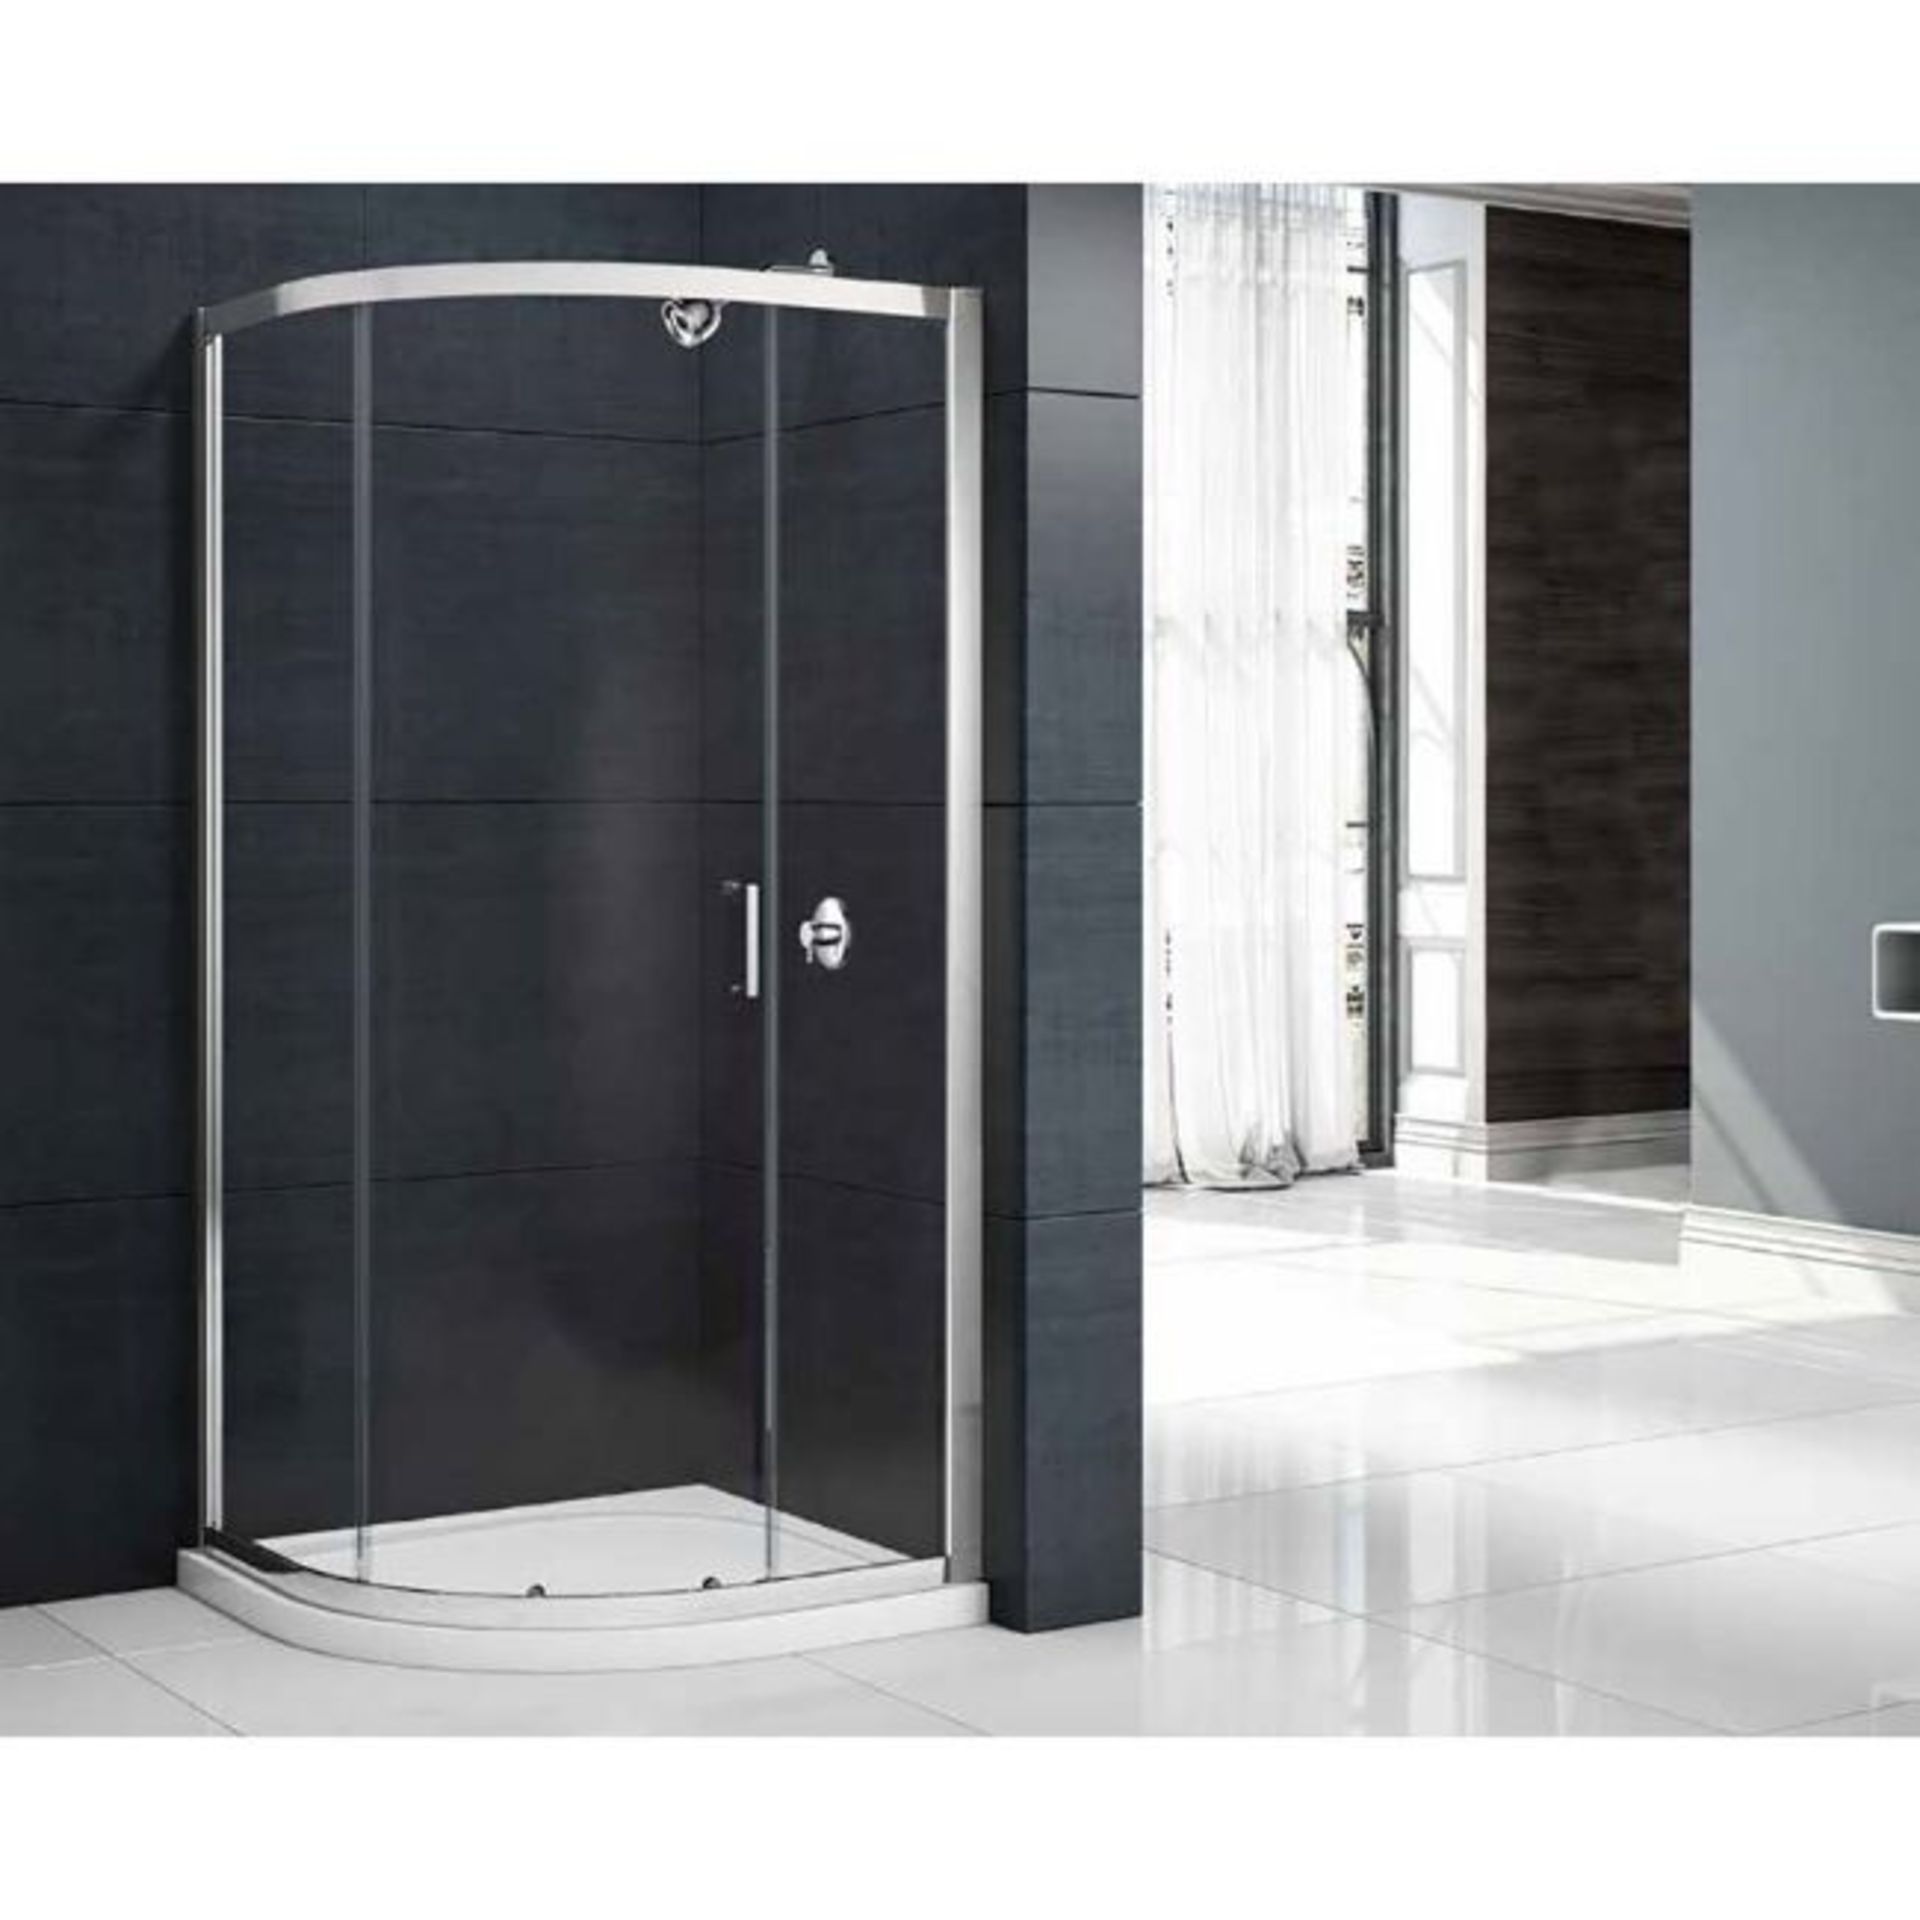 New (G39)900x900mm 1 Door Quadrant Shower Enclosure. RRP £398.29.Constructed Of 6mm Lightweigh...